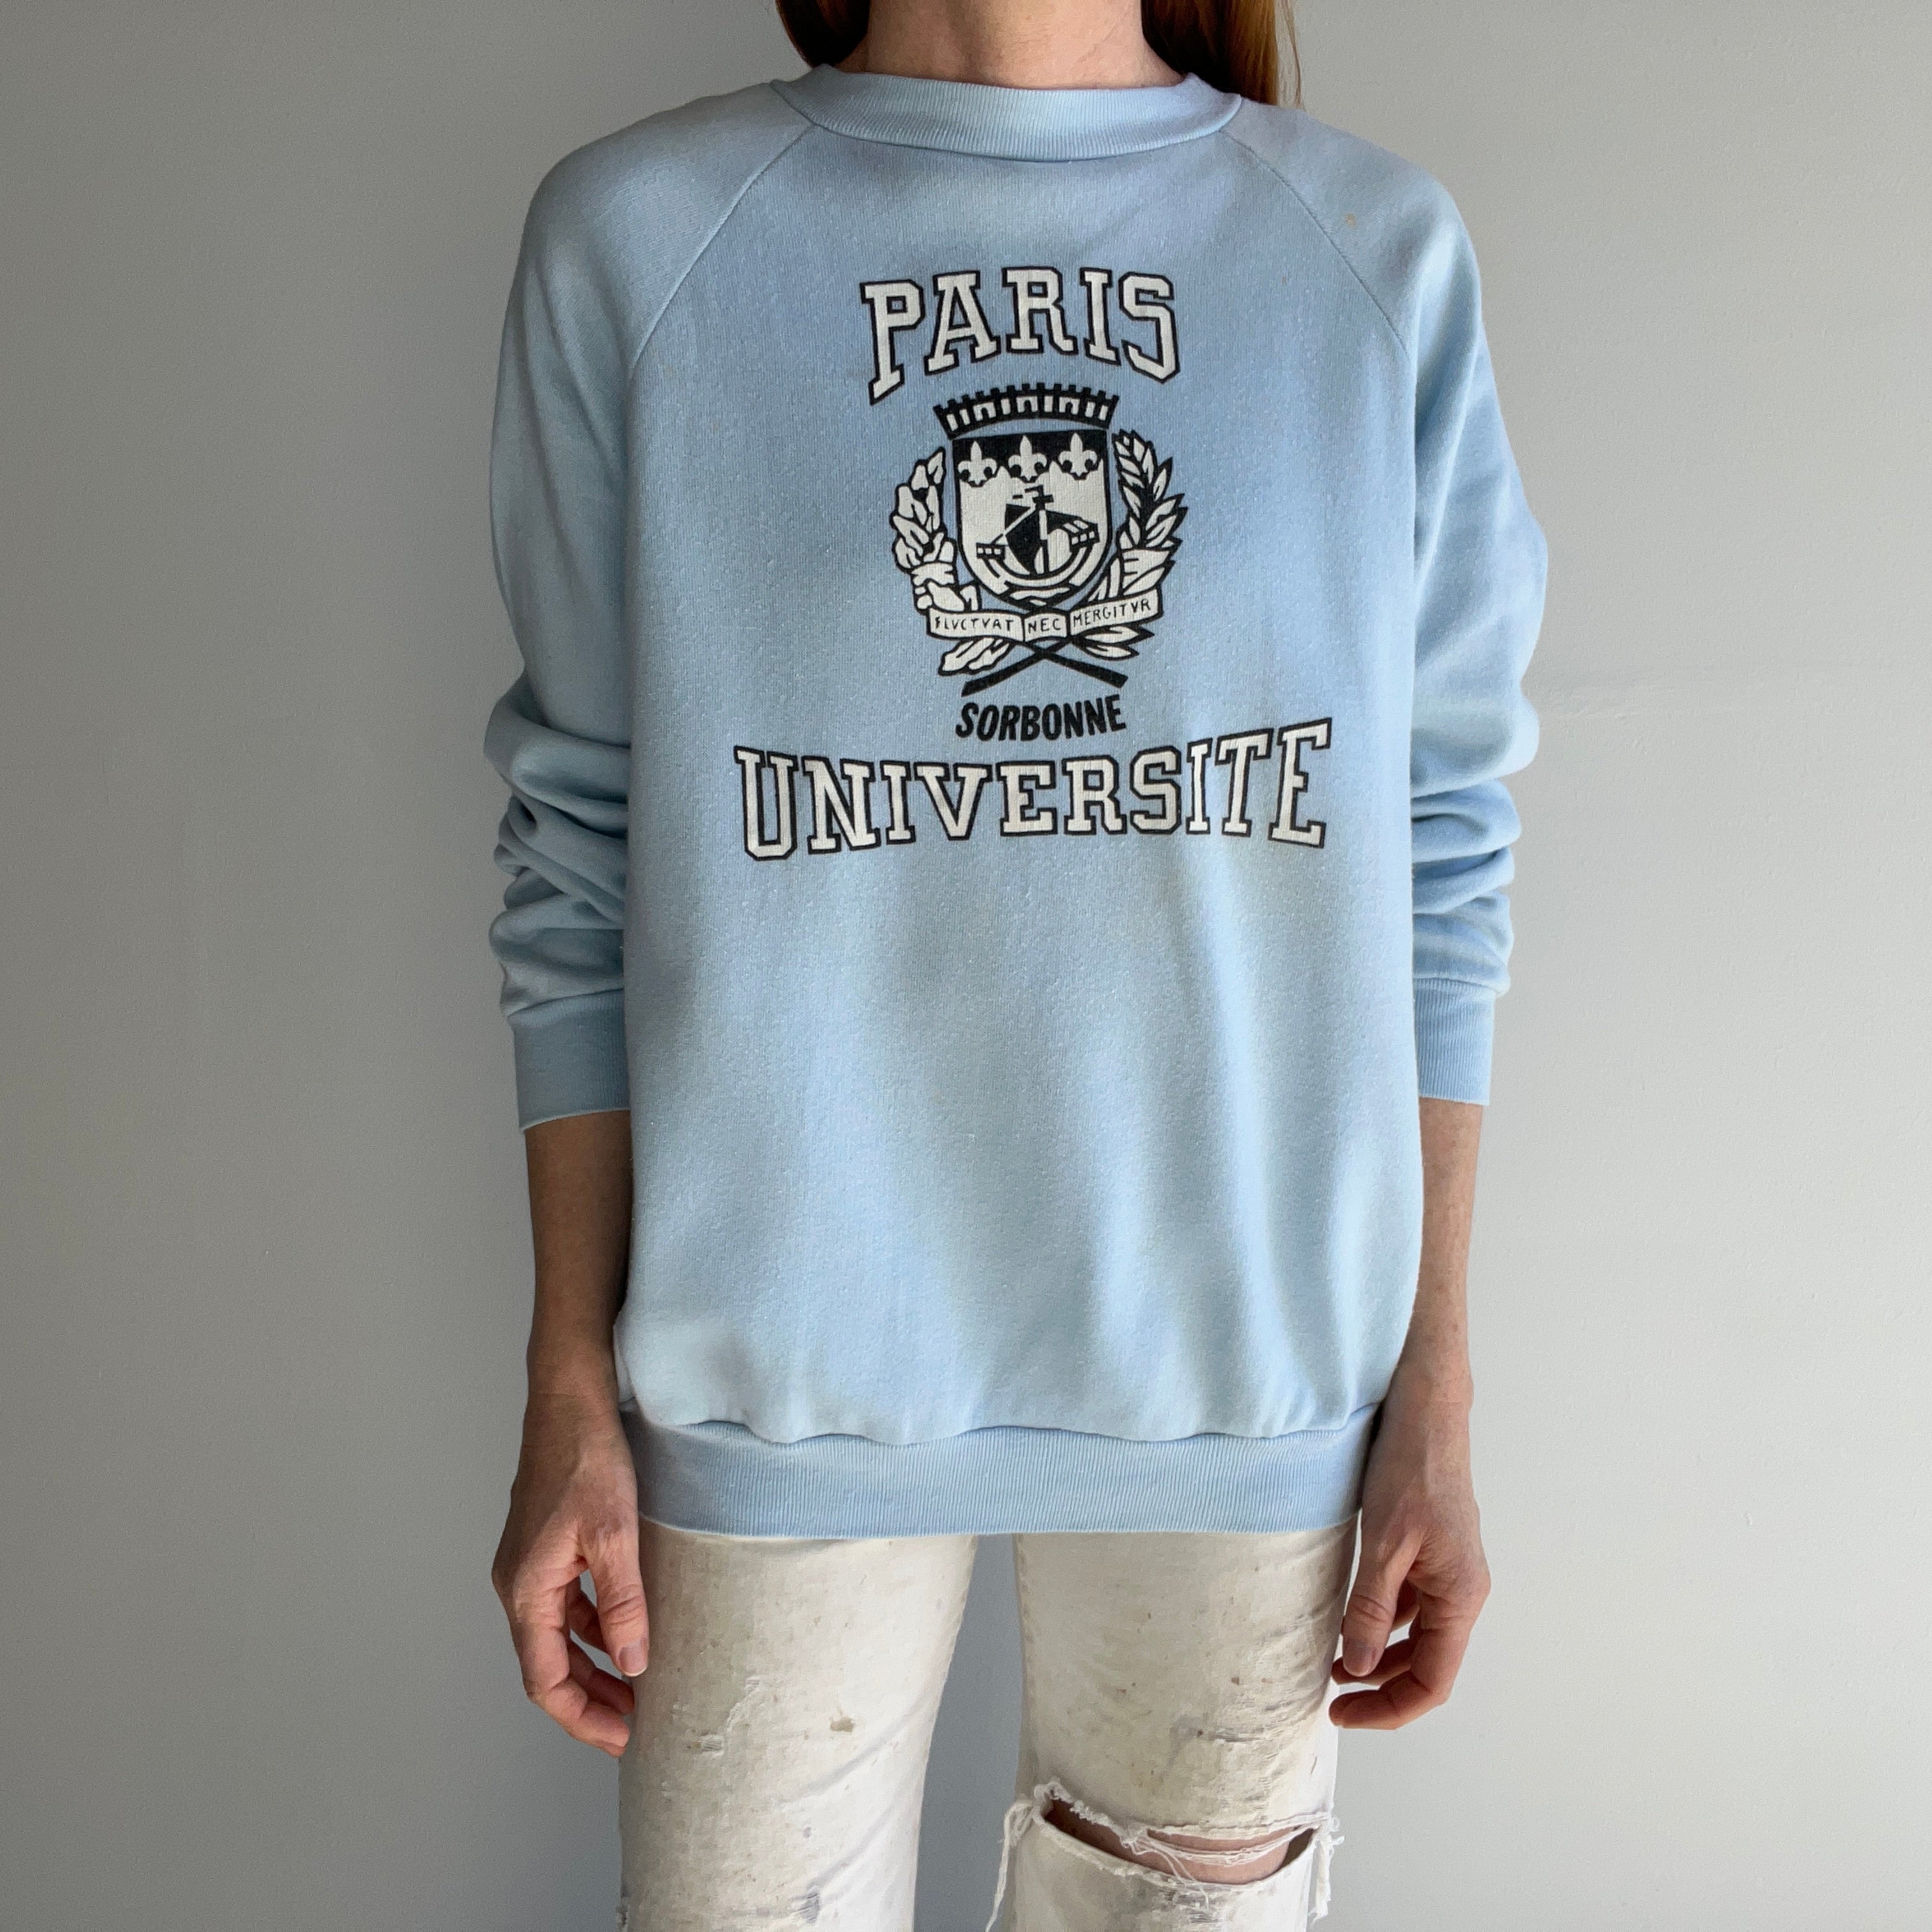 1970/80s Paris Universite Sweatshirt